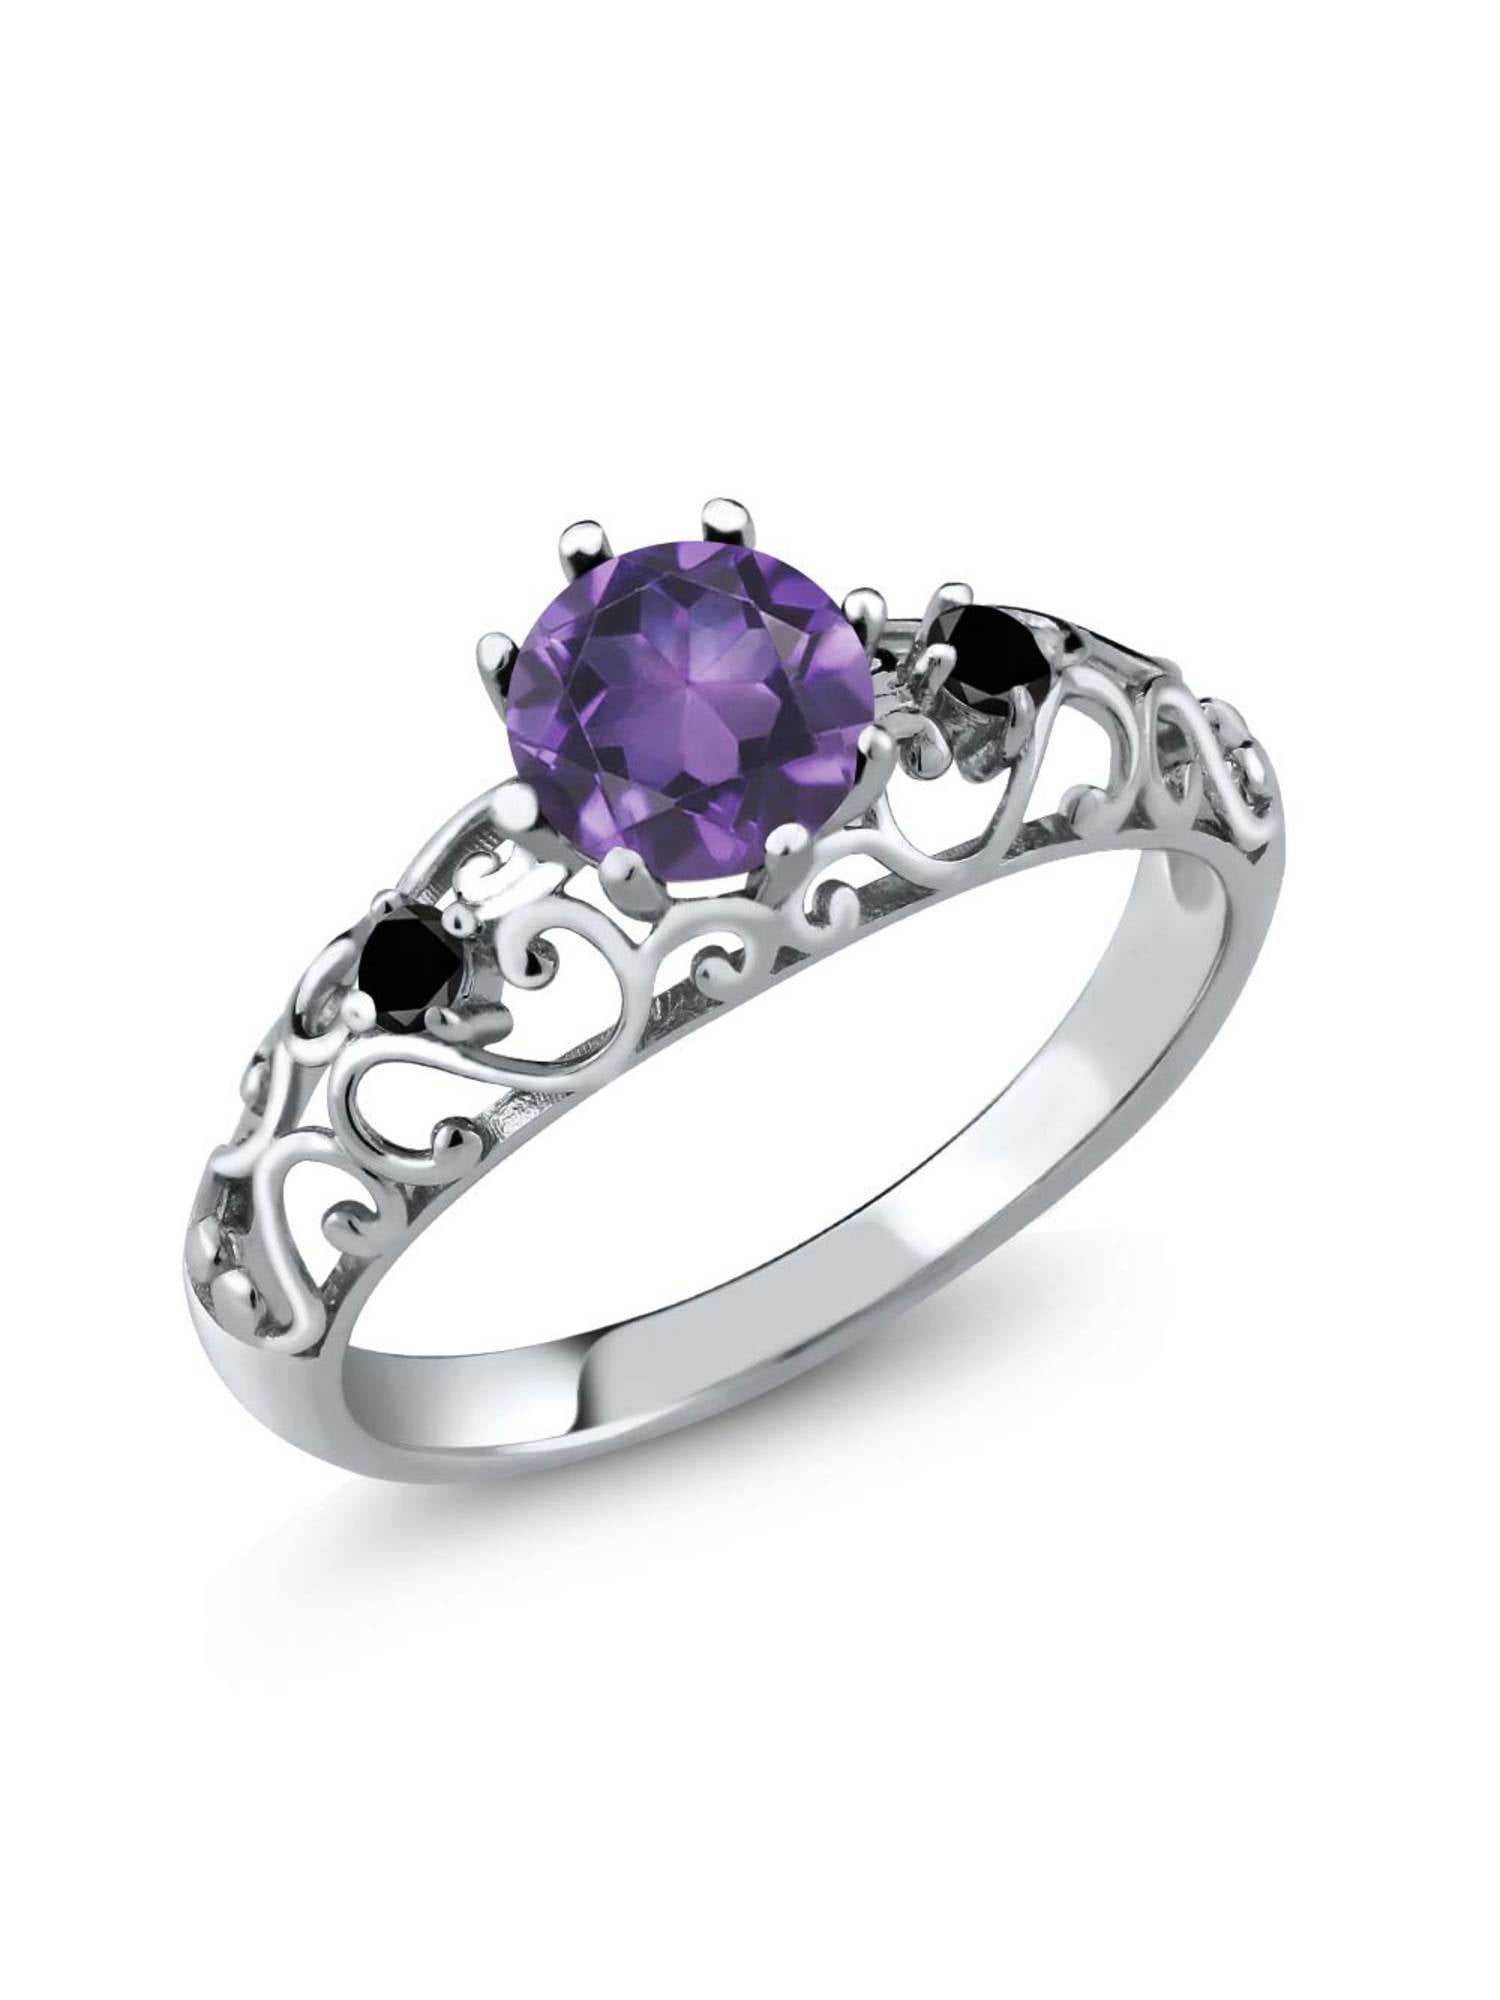 Gem Stone King 1.02 Ct Round Purple Amethyst Black Diamond 925 Sterling Silver Ring